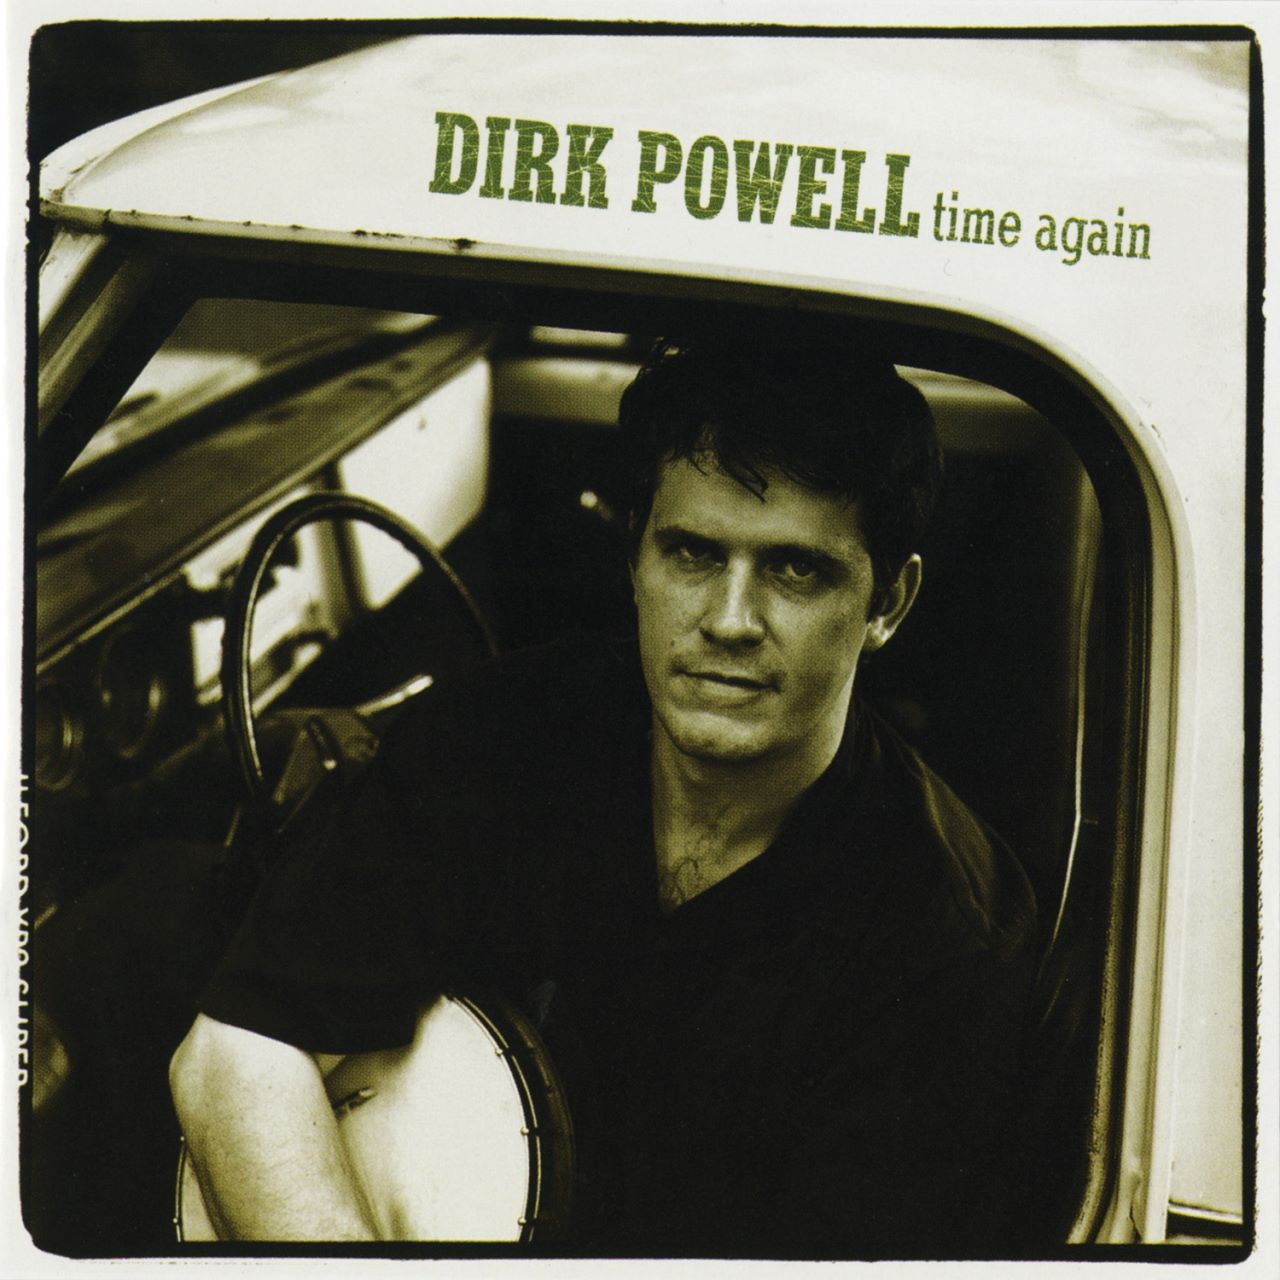 Dirk Powell - Time Again covewr album